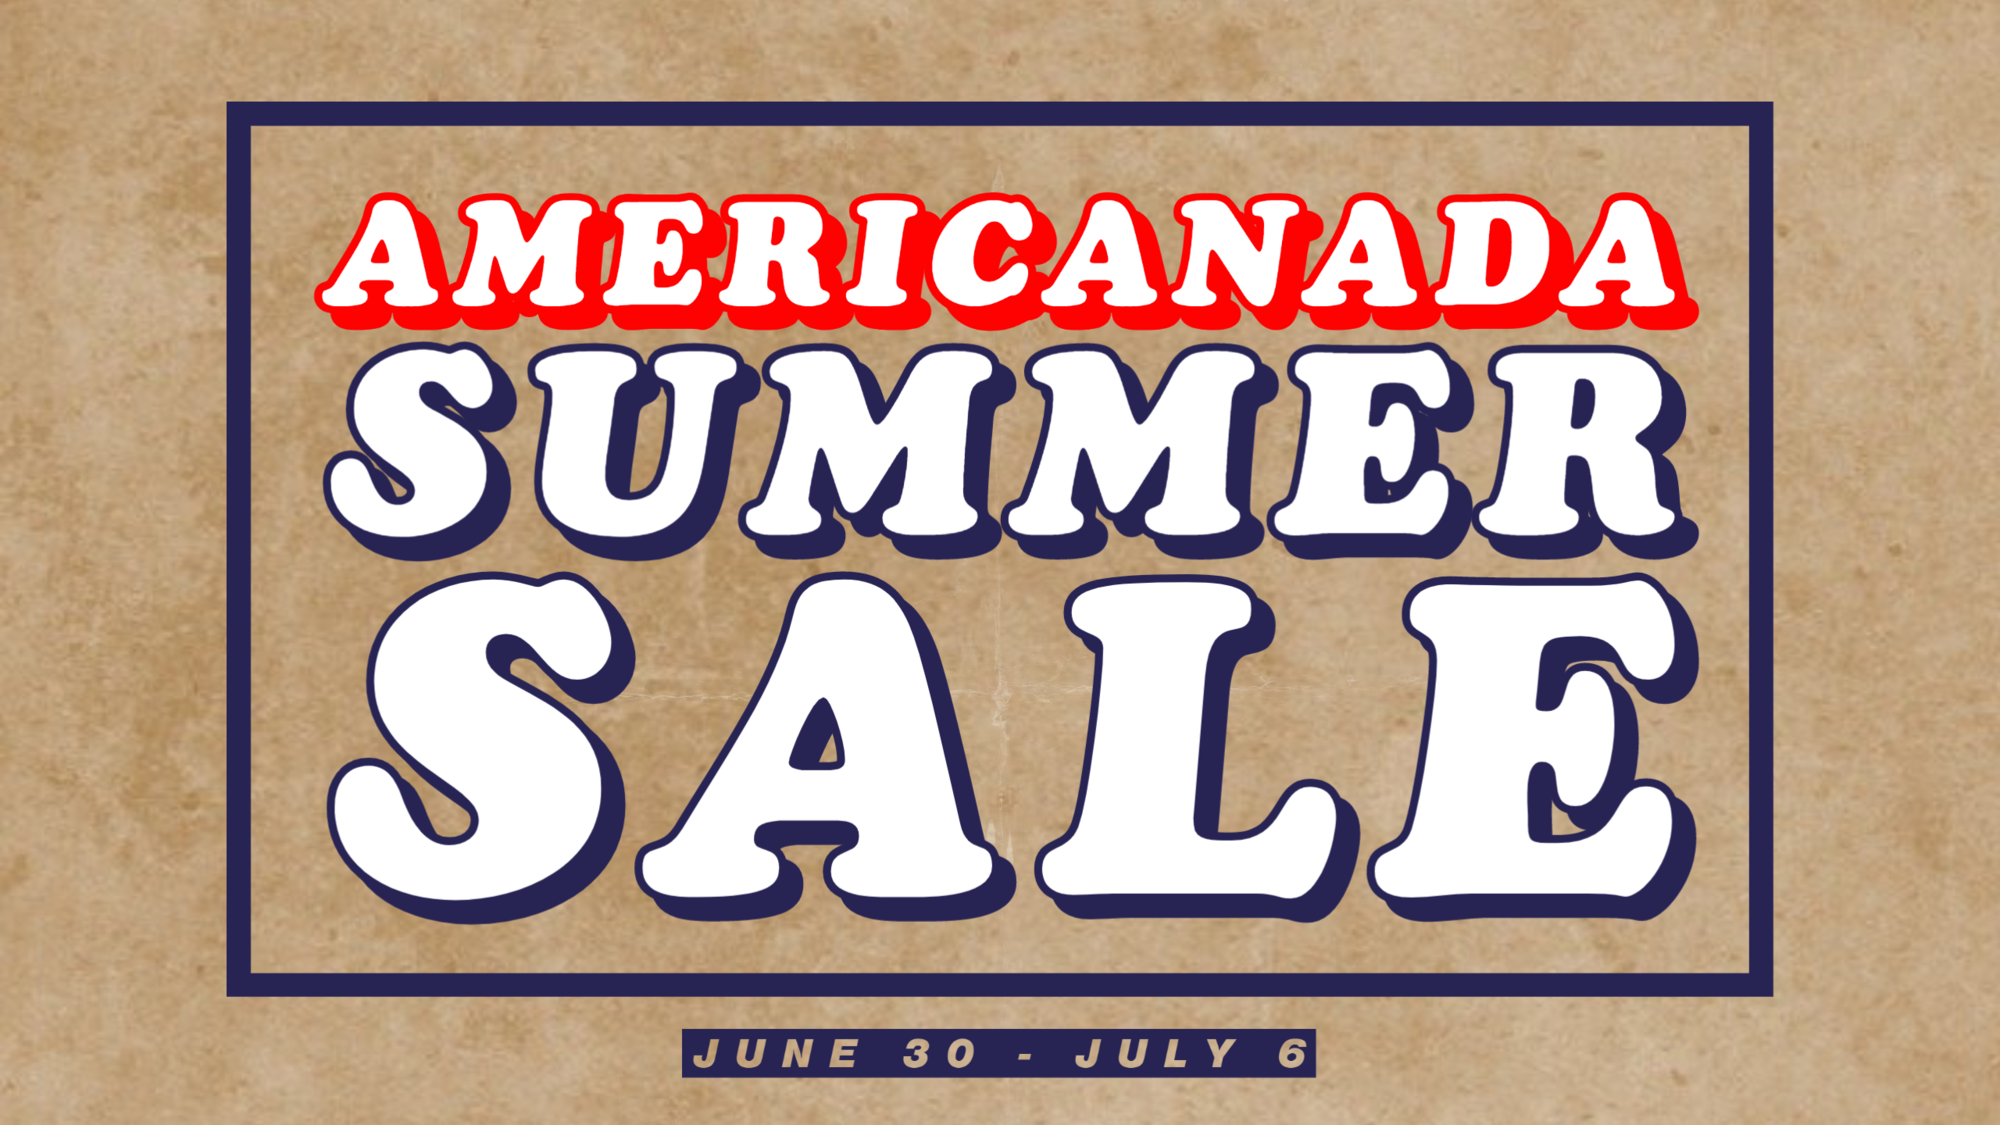 Americanada Summer Sale - June 30 - July 6